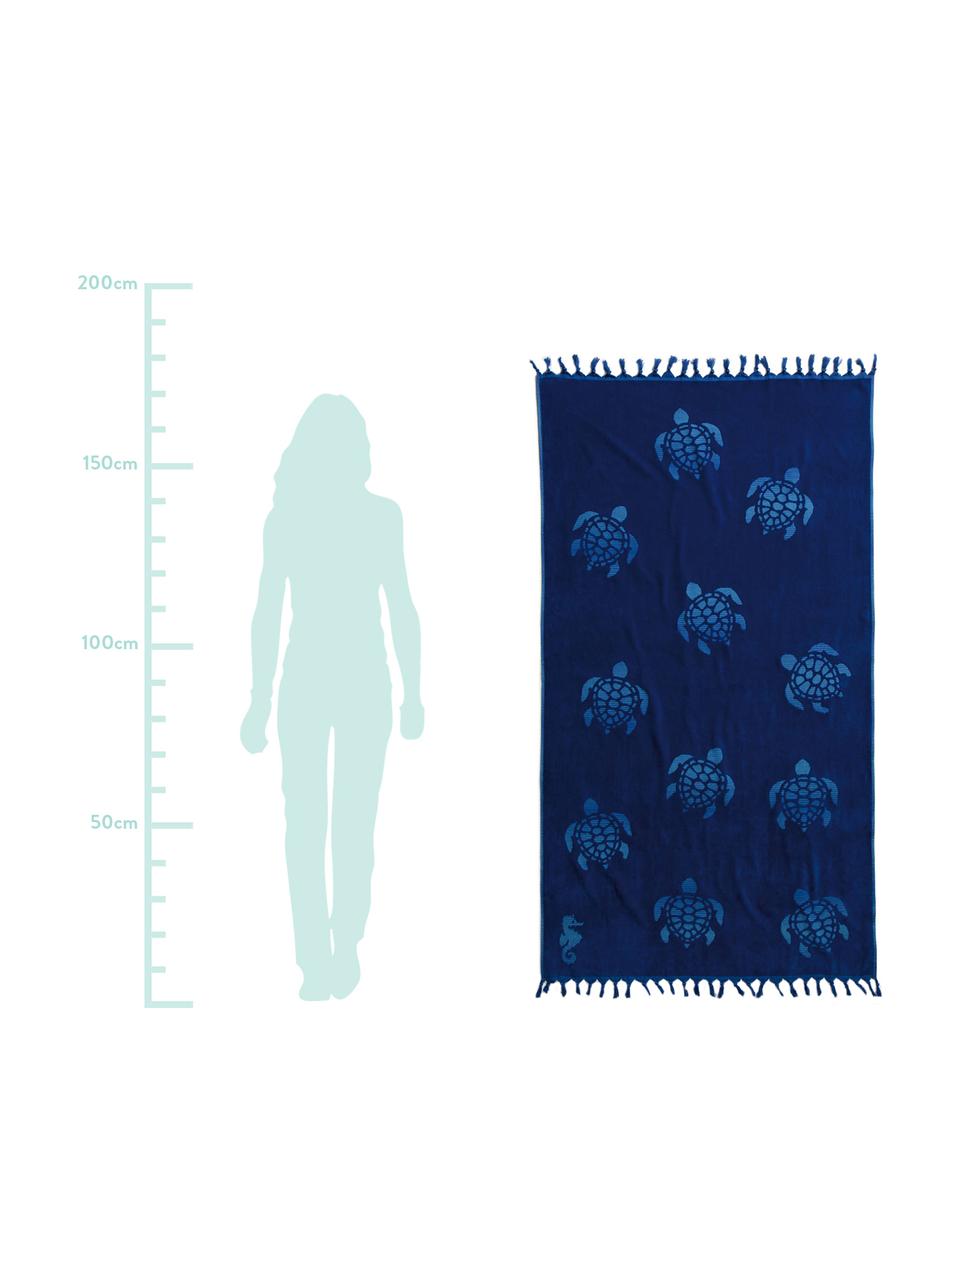 Telo fouta in cotone Tartaruga, Cotone, Blu scuro, Larg. 100 x Lung. 180 cm